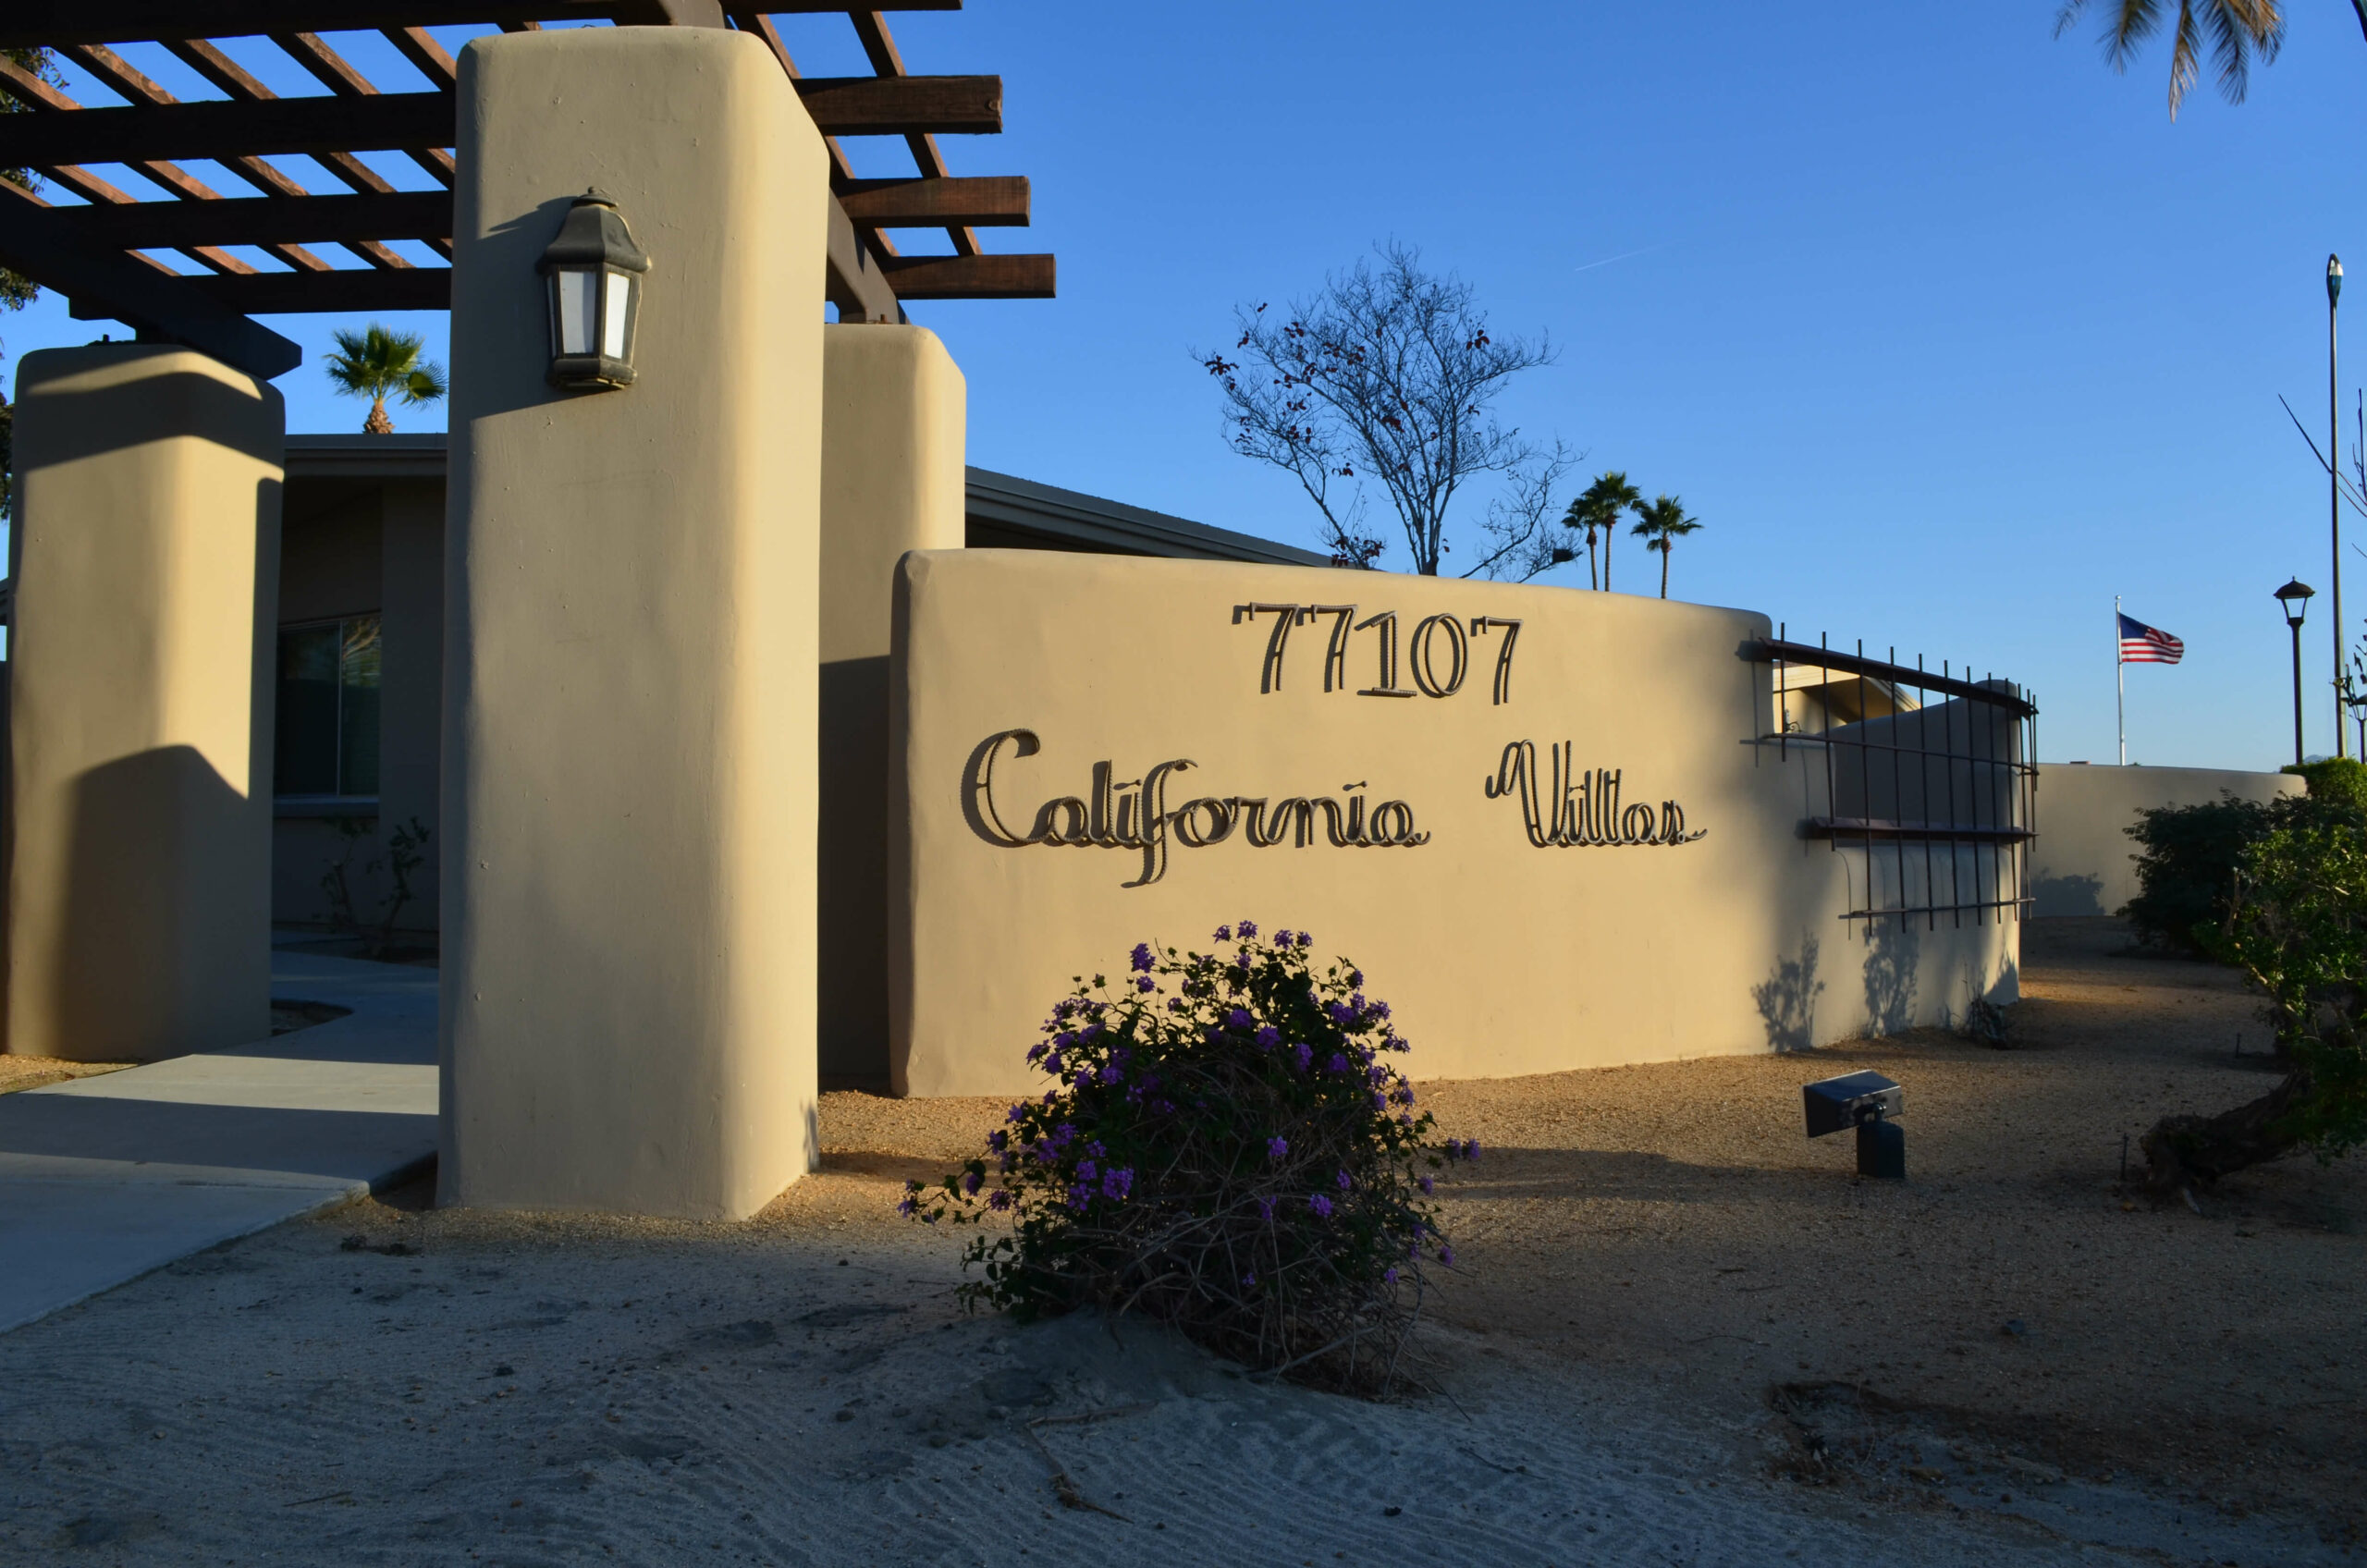 California Villas, 77-107 California Drive